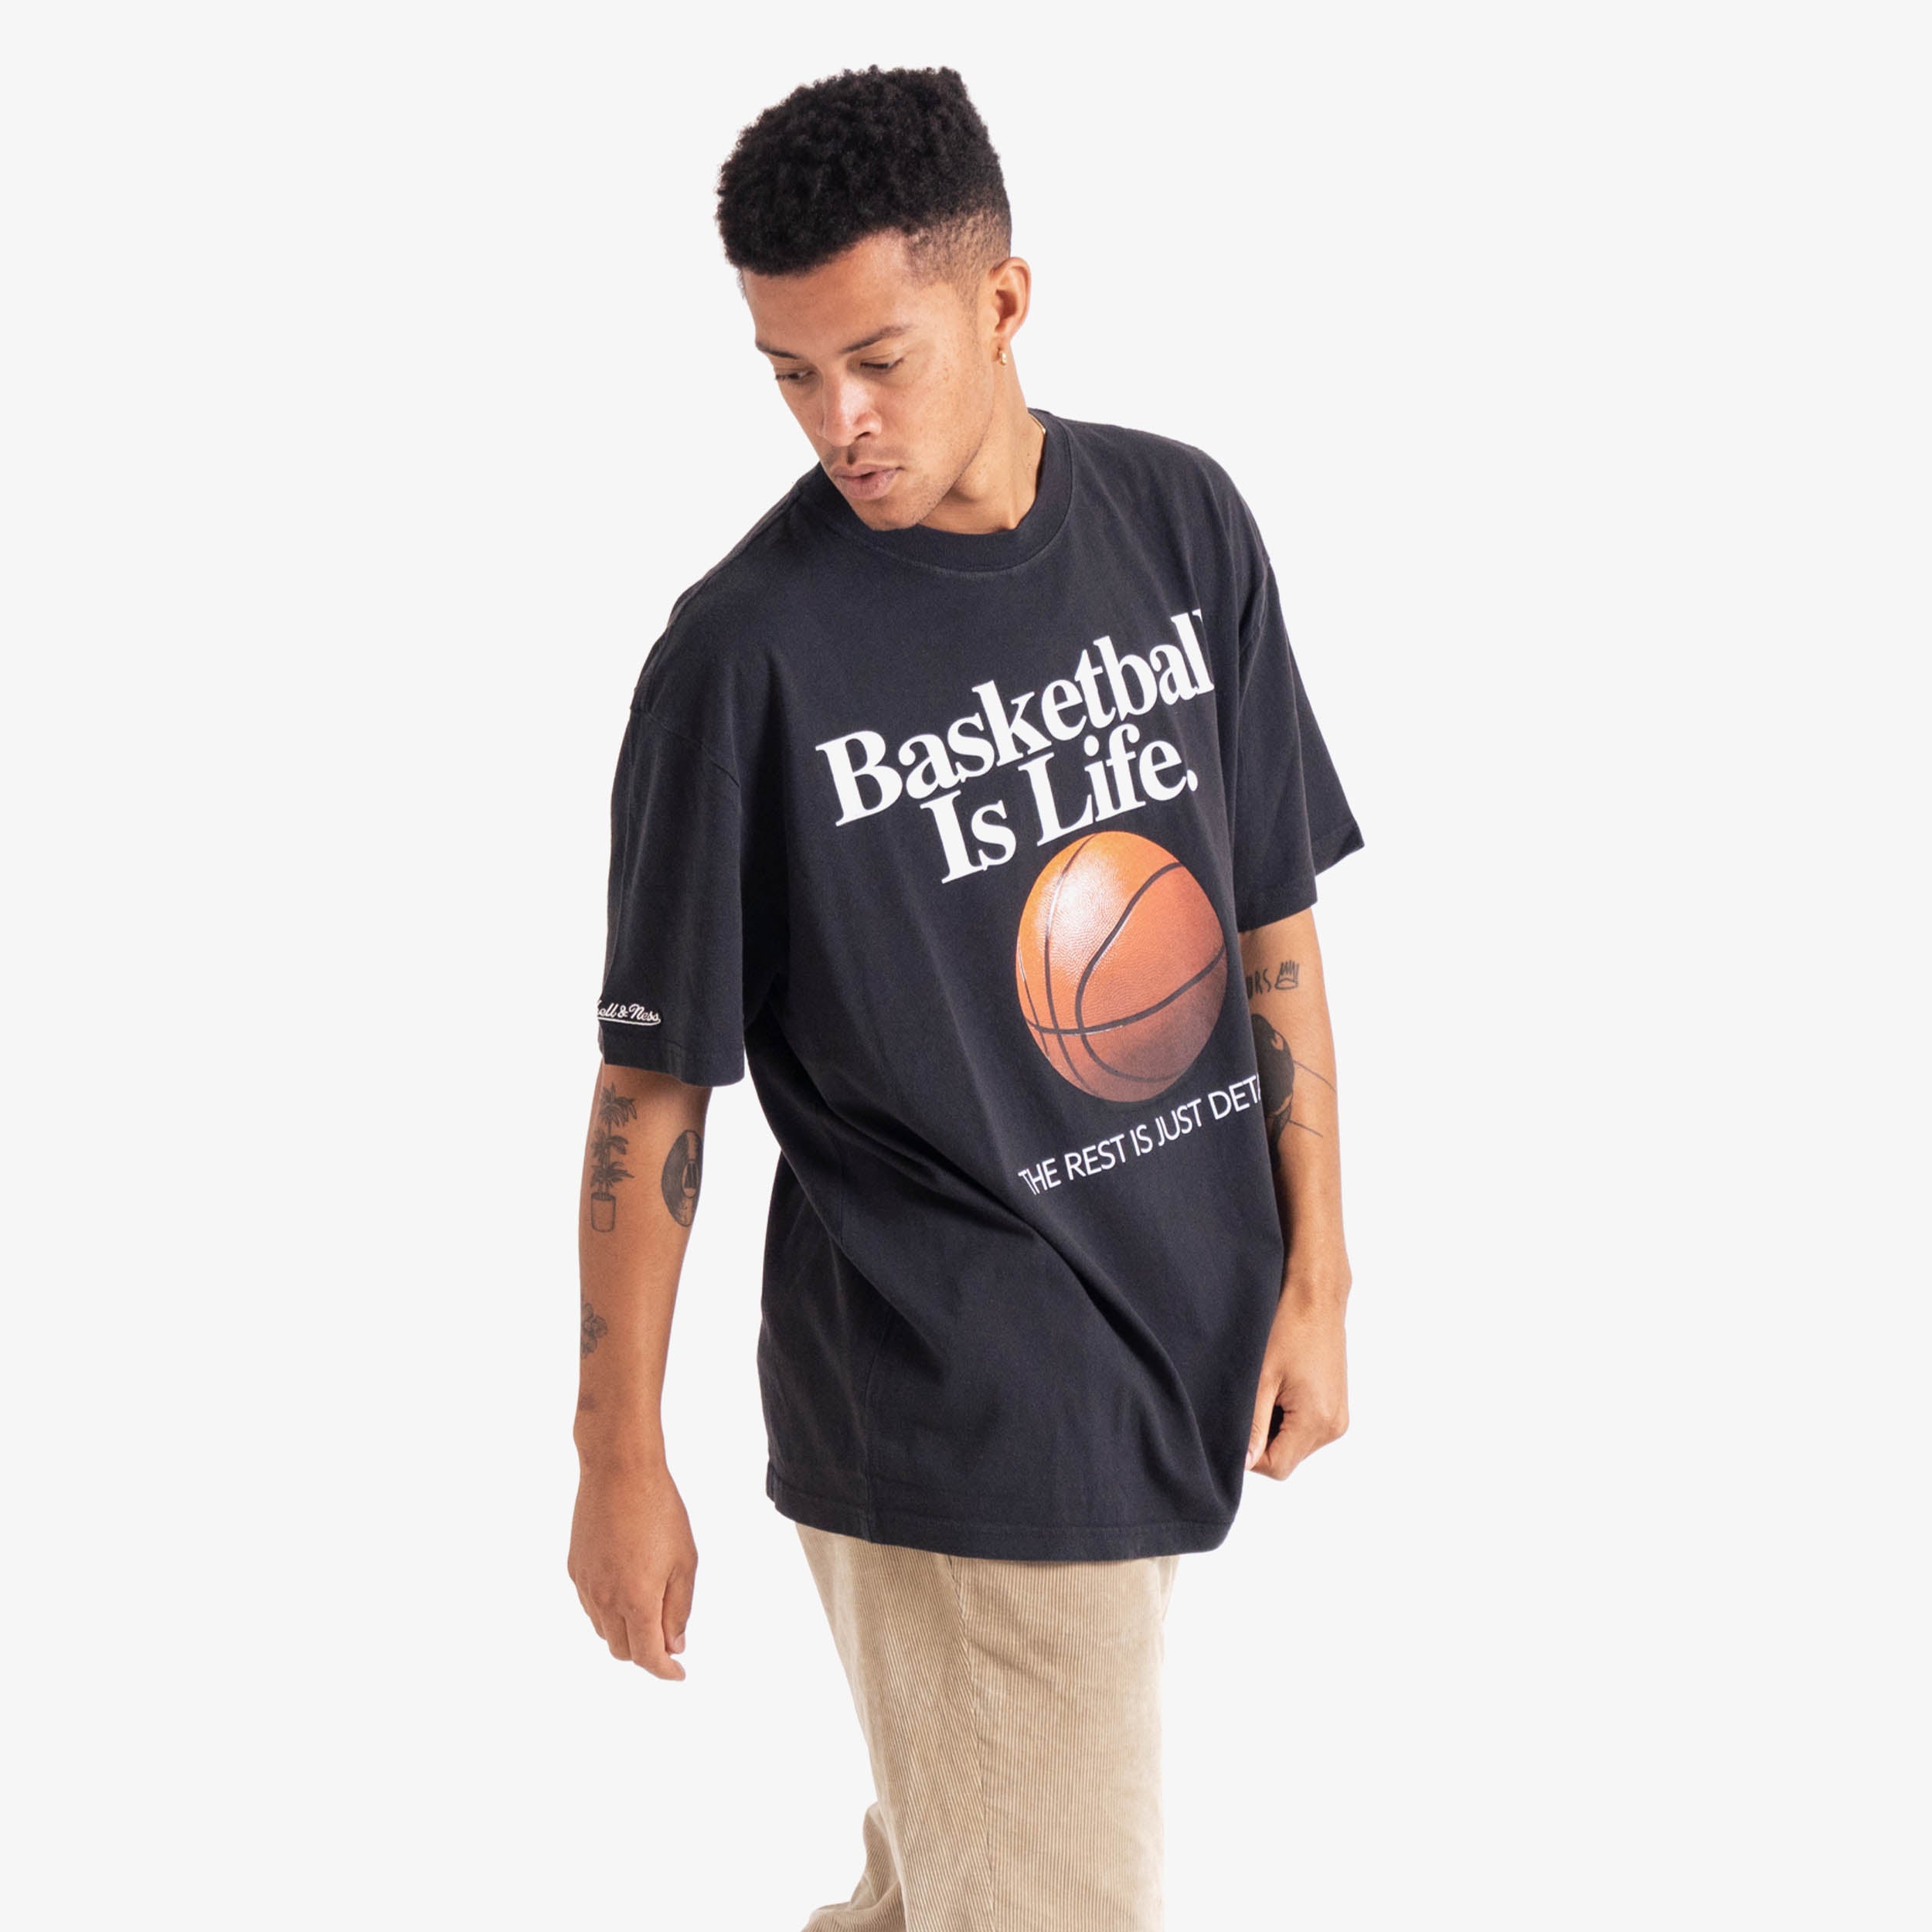 Kobe Bryant T-Shirt Vintage 90s Basketball Dodgers Shirt Sizes S - 2XL